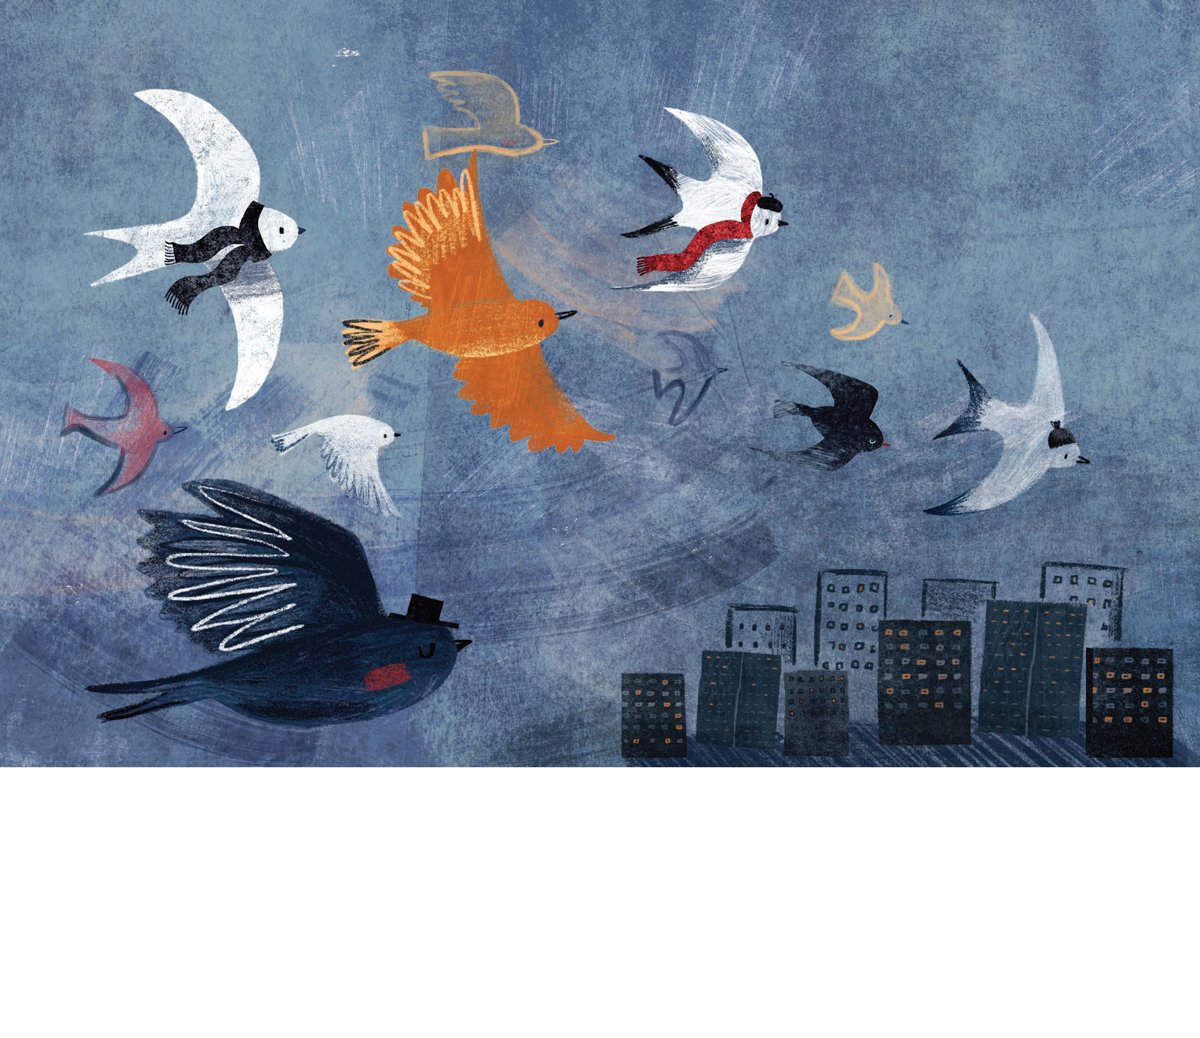 alice-courtley-birds-over-city-illustration.jpg